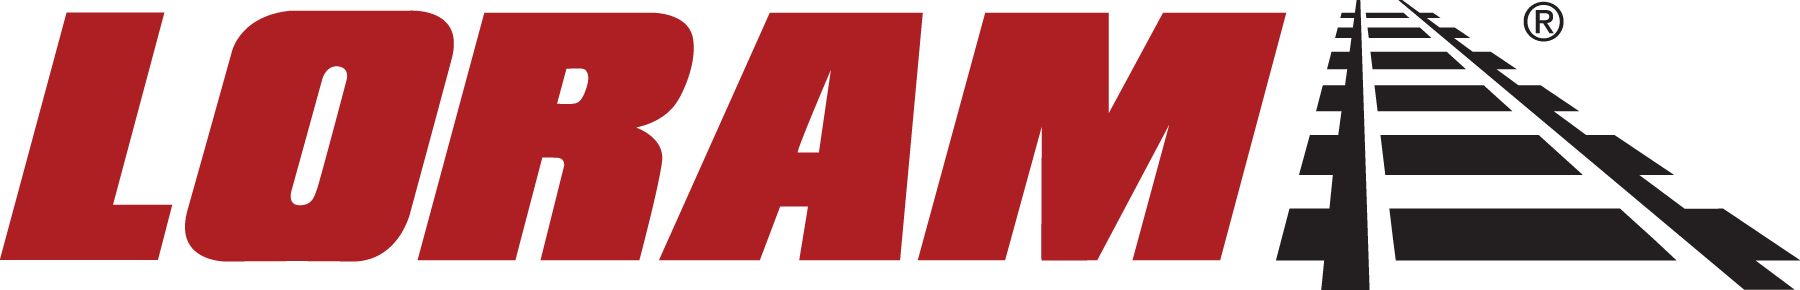 loram logo